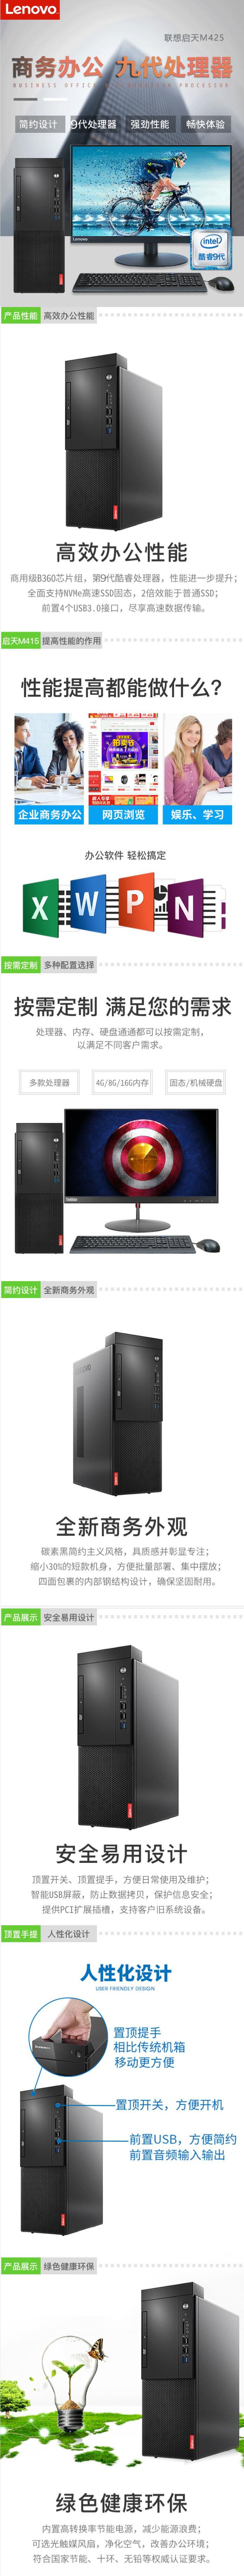 联想/Lenovo 启天M425 台式整机（i5-9400/4G/1T/集显/DVDRW）主机+21.5英寸显示器 (图6)